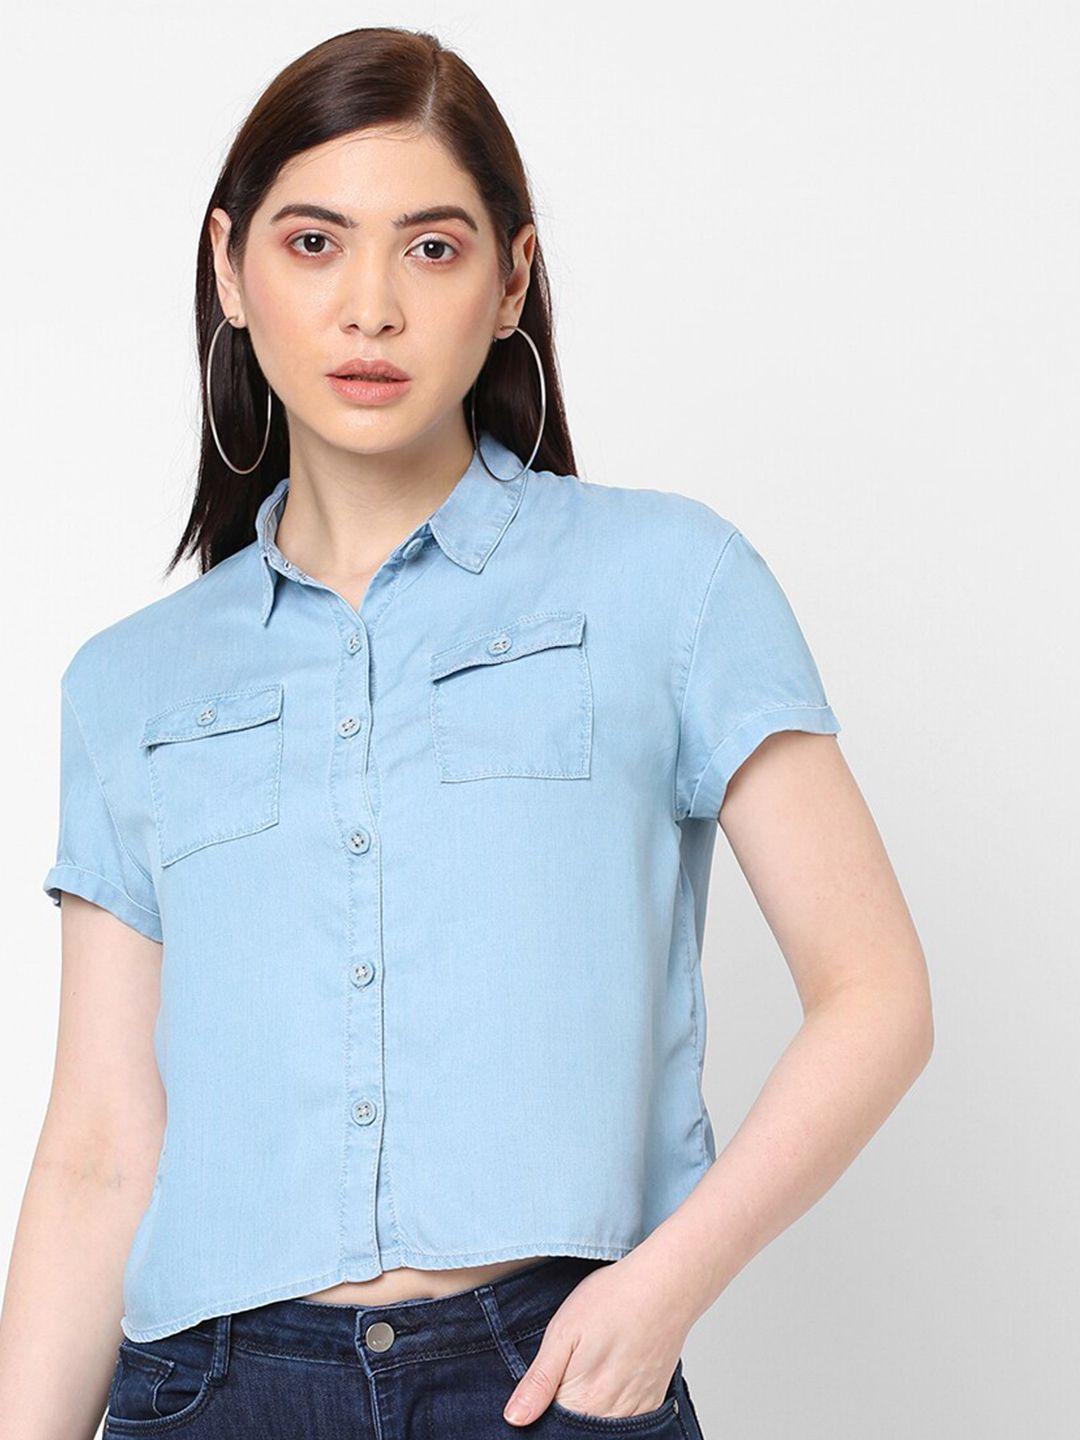 kraus jeans women blue slim fit cop denim casual shirt